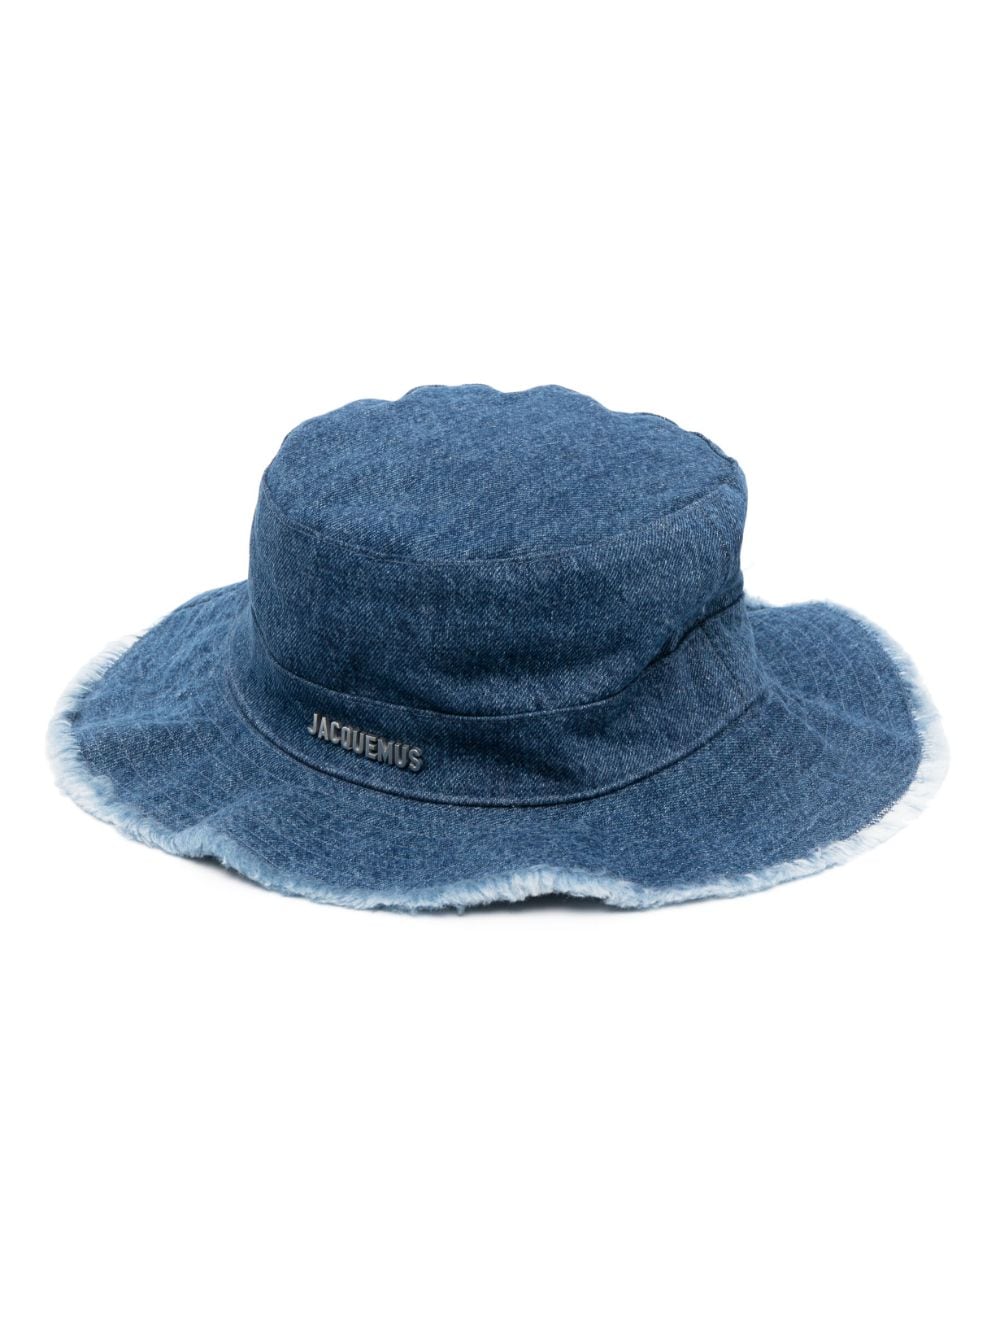 JACQUEMUS BLUE BOB HAT